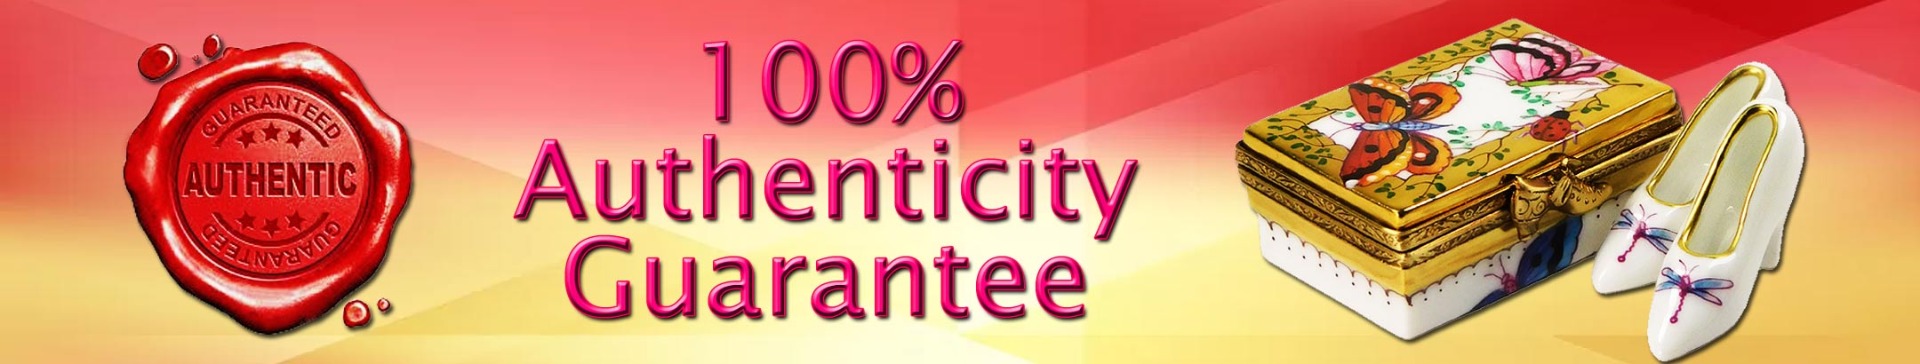 Authenticity Guarantee | LimogesCollector.com